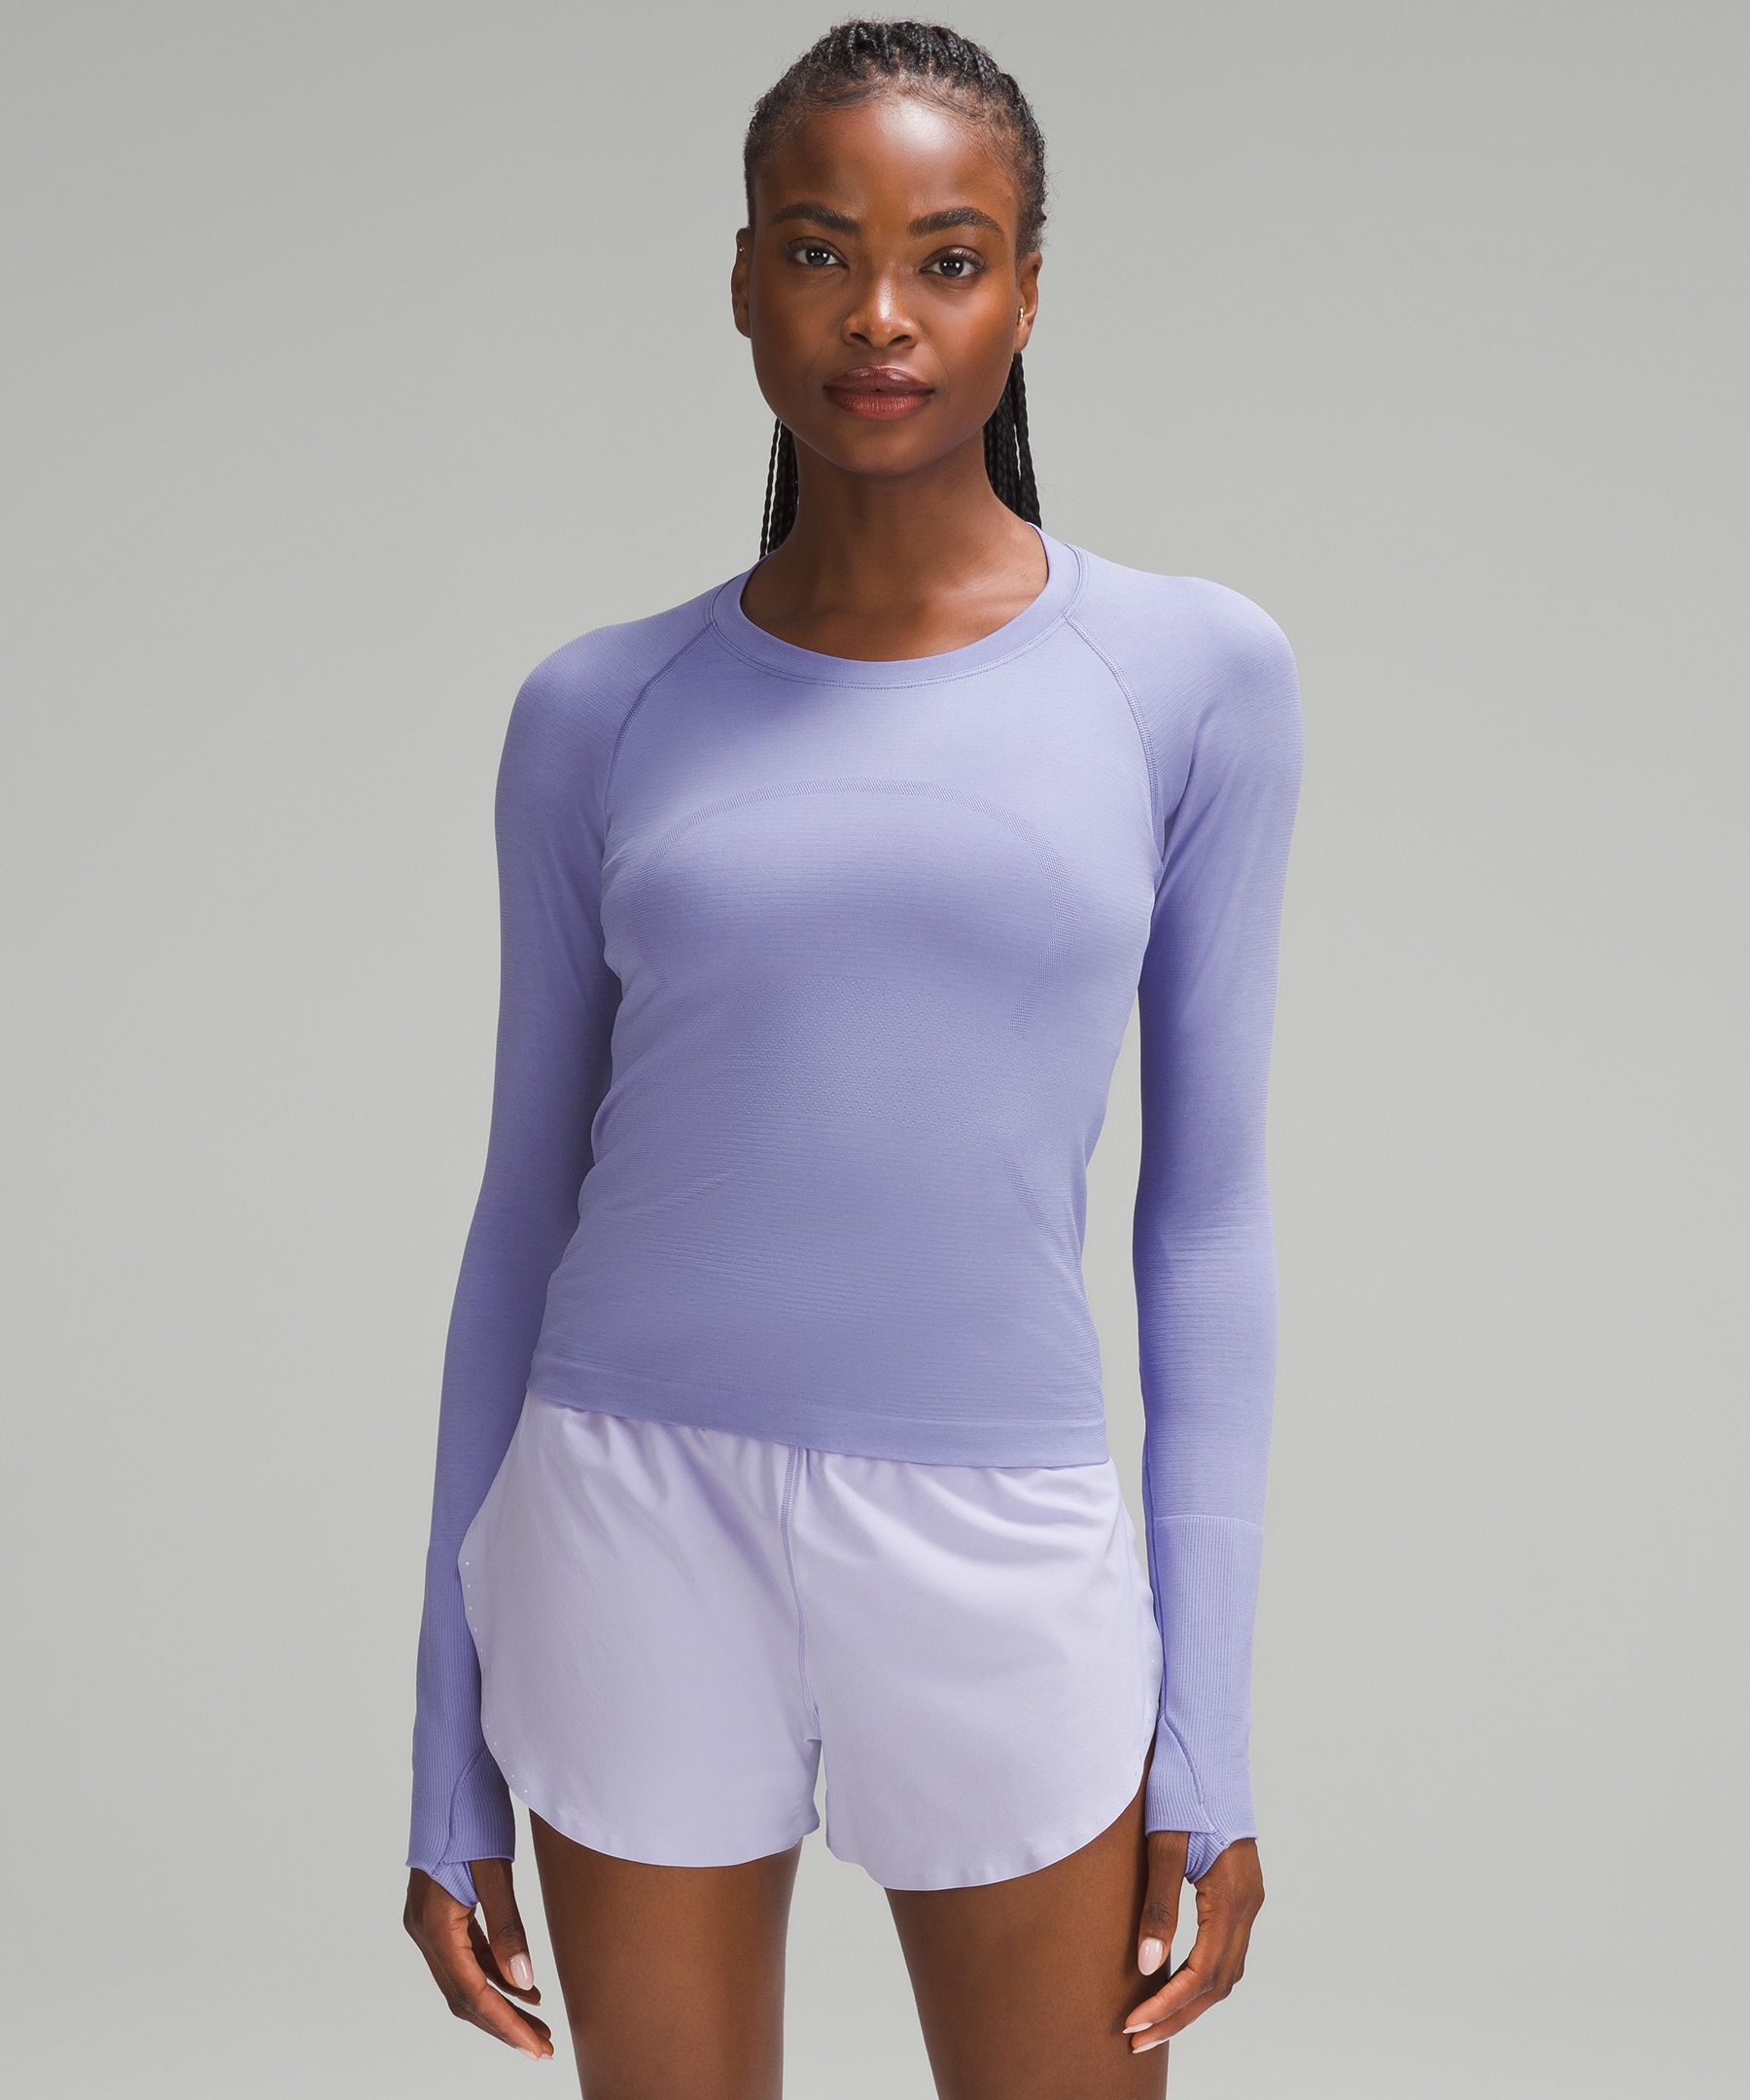 Lululemon athletica Swiftly Tech Long-Sleeve Shirt 2.0 *Race Length, Women's Long Sleeve Shirts